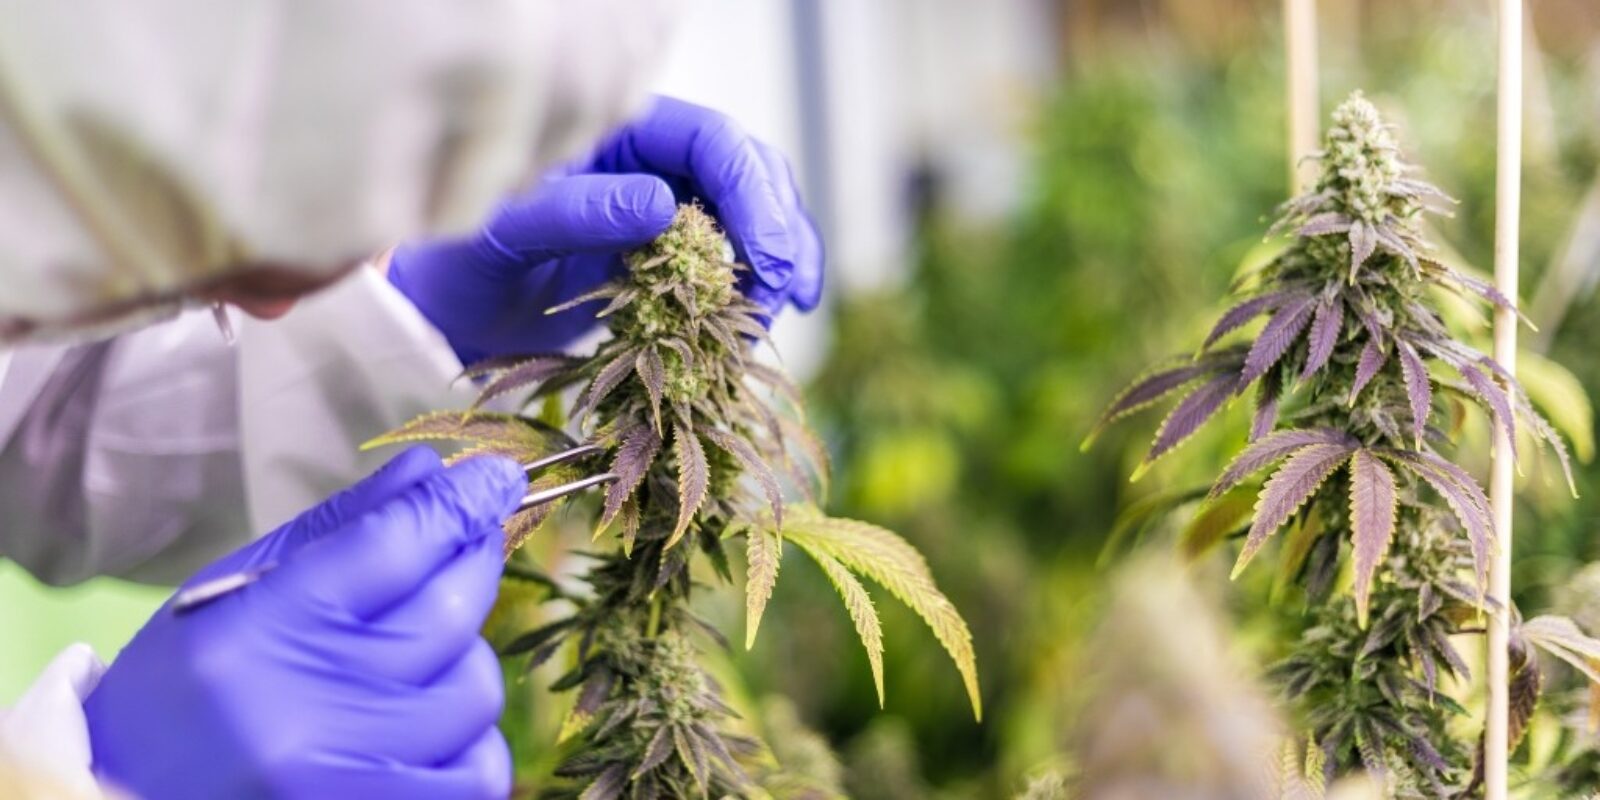 Scientist prodding at a cannabis plant.